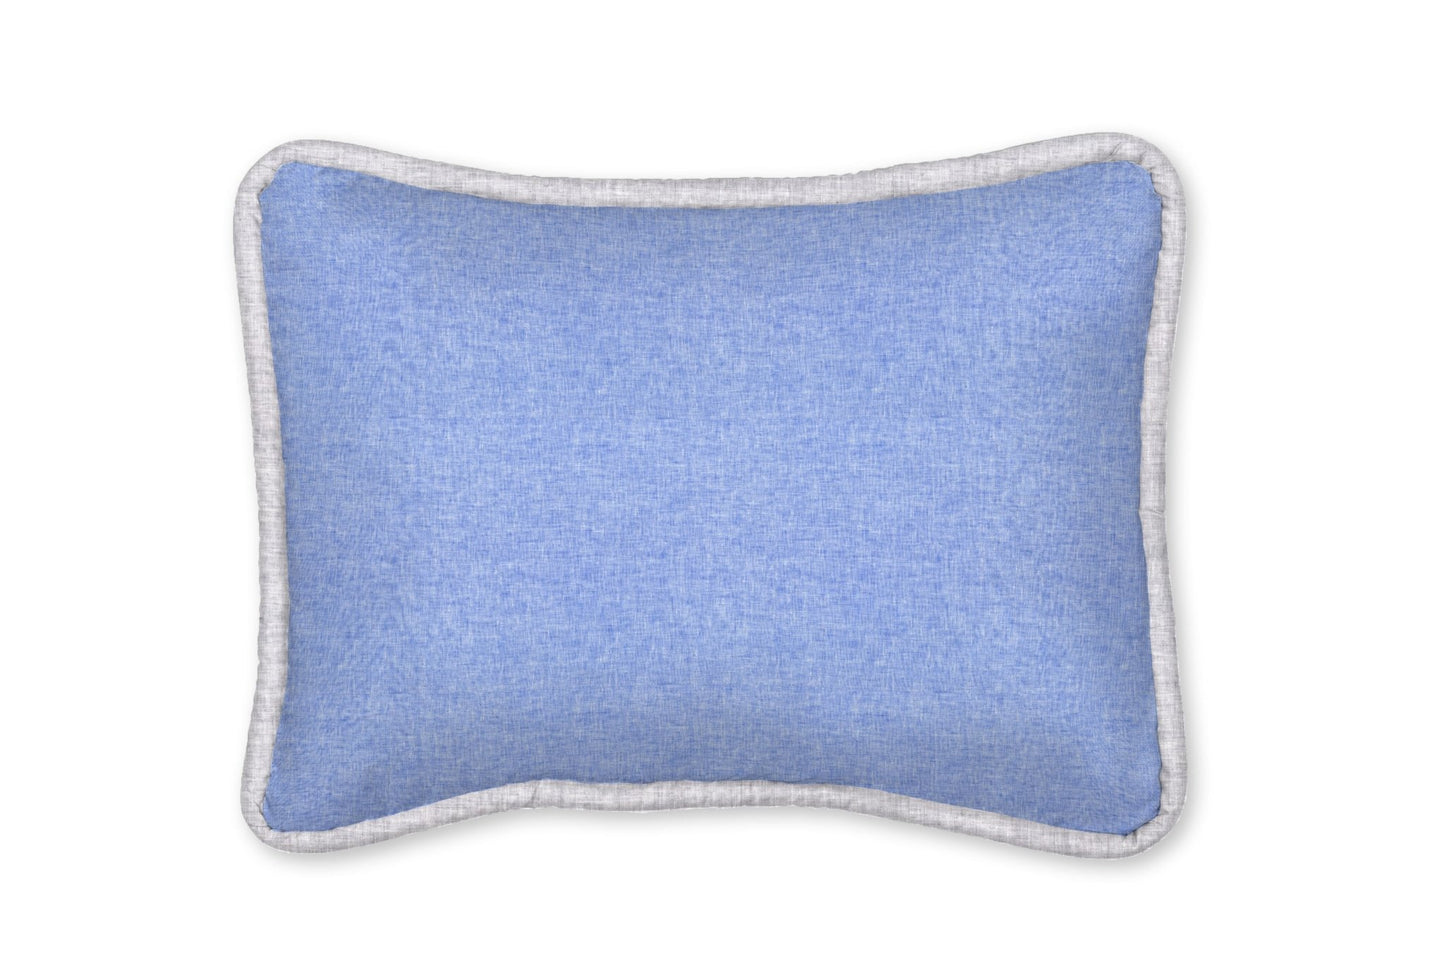 Nantucket Blue and Gray Linen Decorative Pillow - New Arrivals Inc